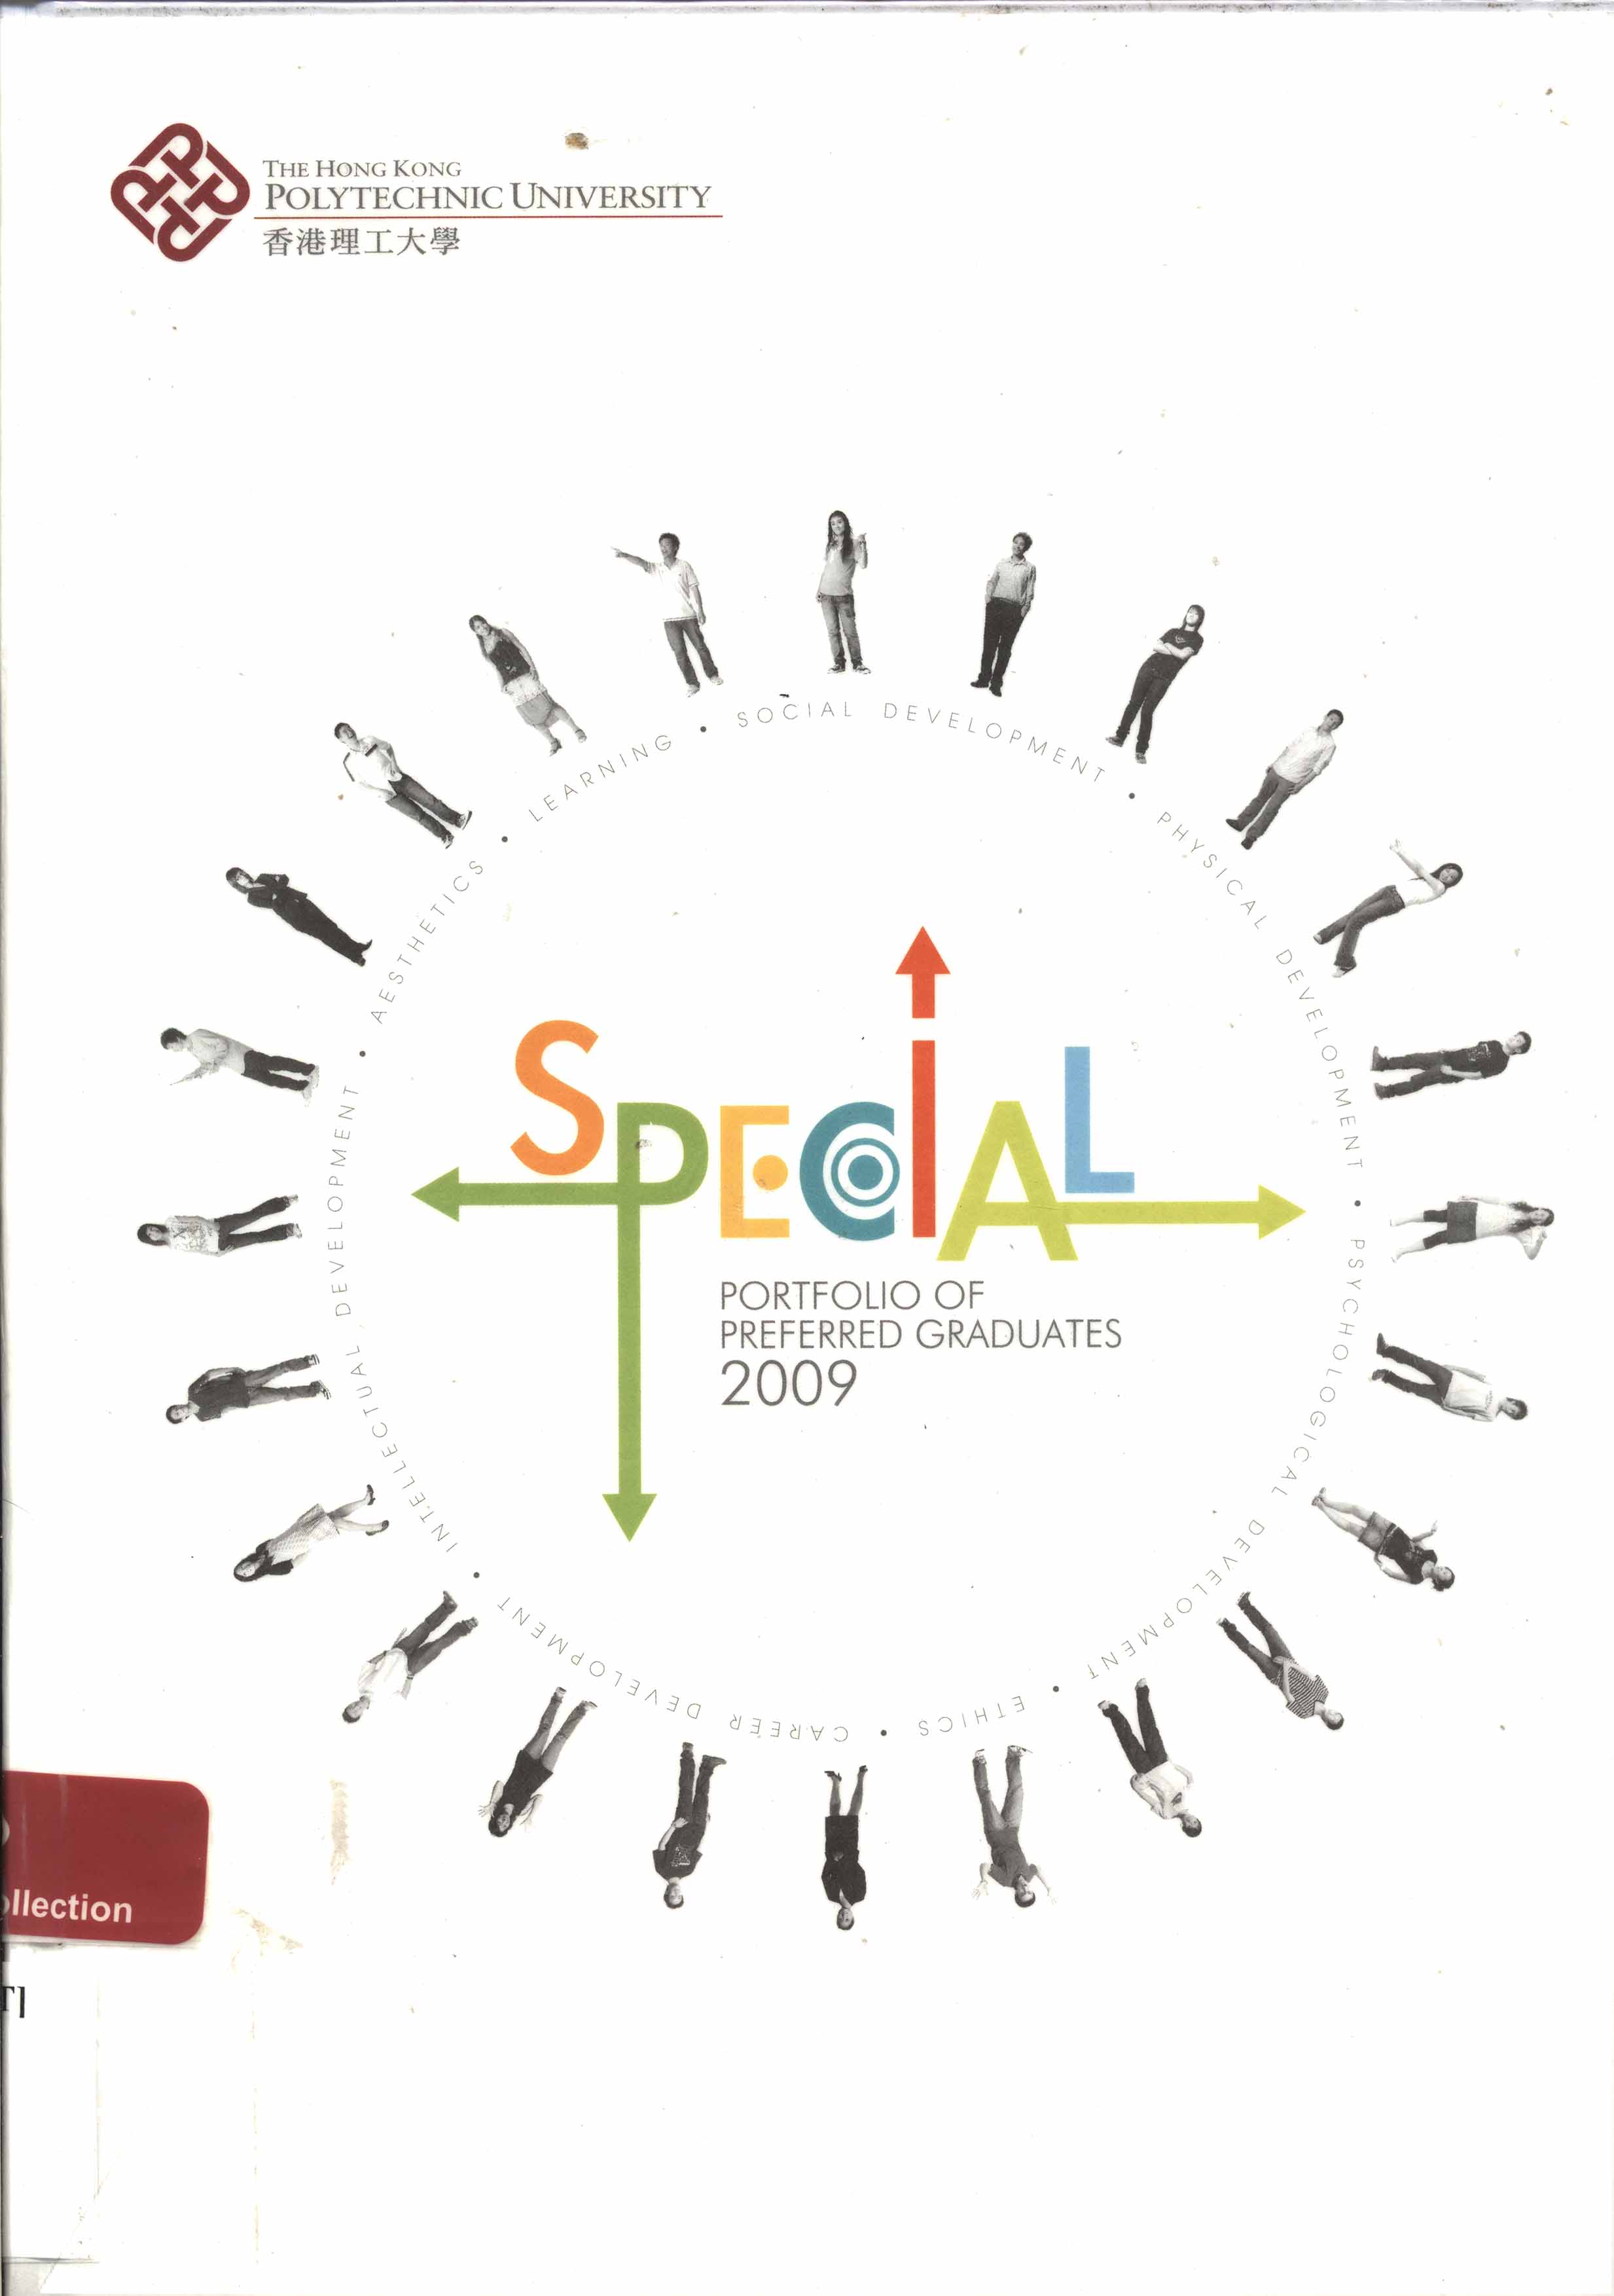 Special portfolio of preferred graduates 2009